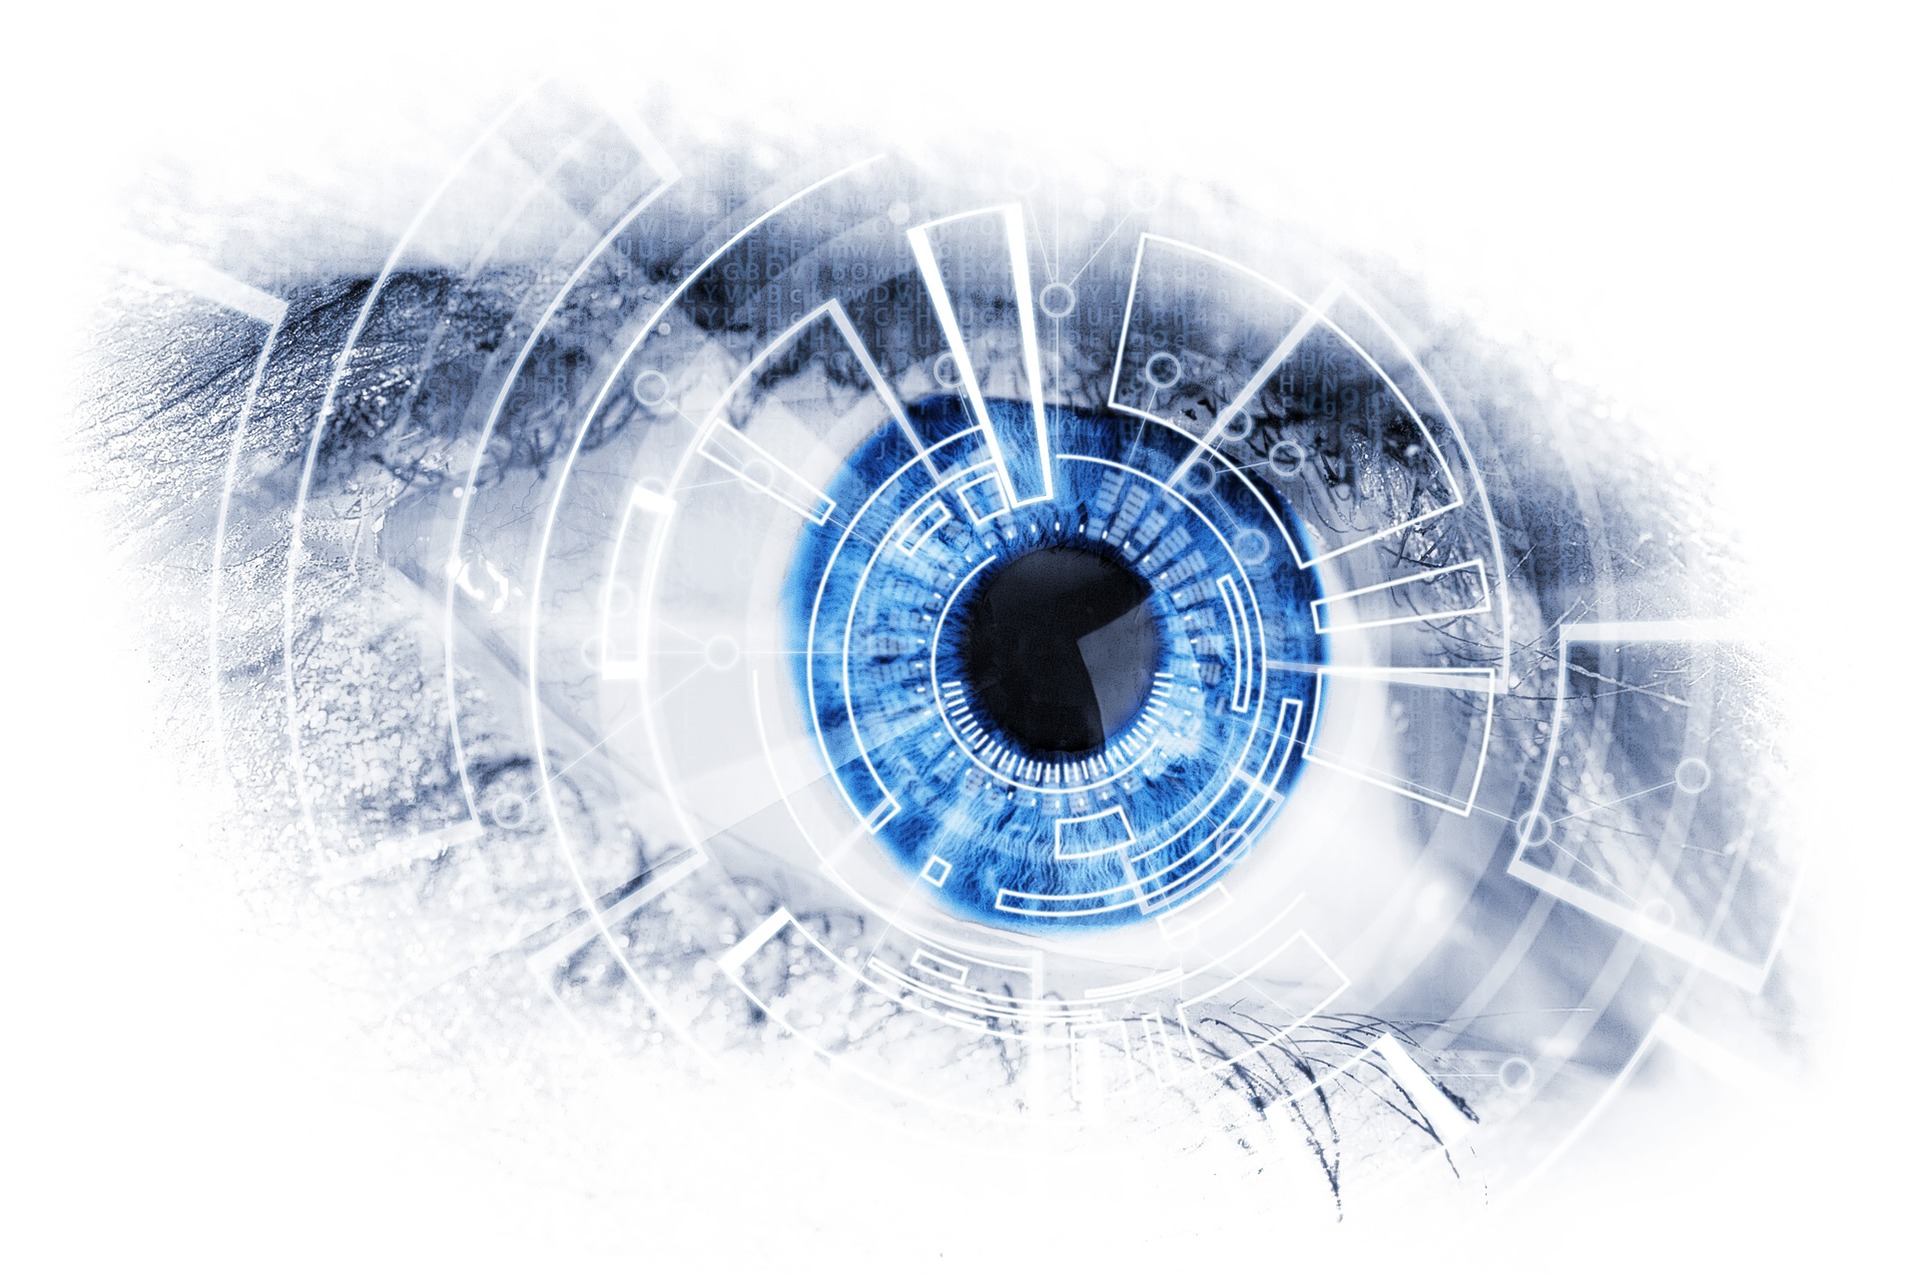 NVIDIA Focusing On Deep Learning For Detecting Eye Disease